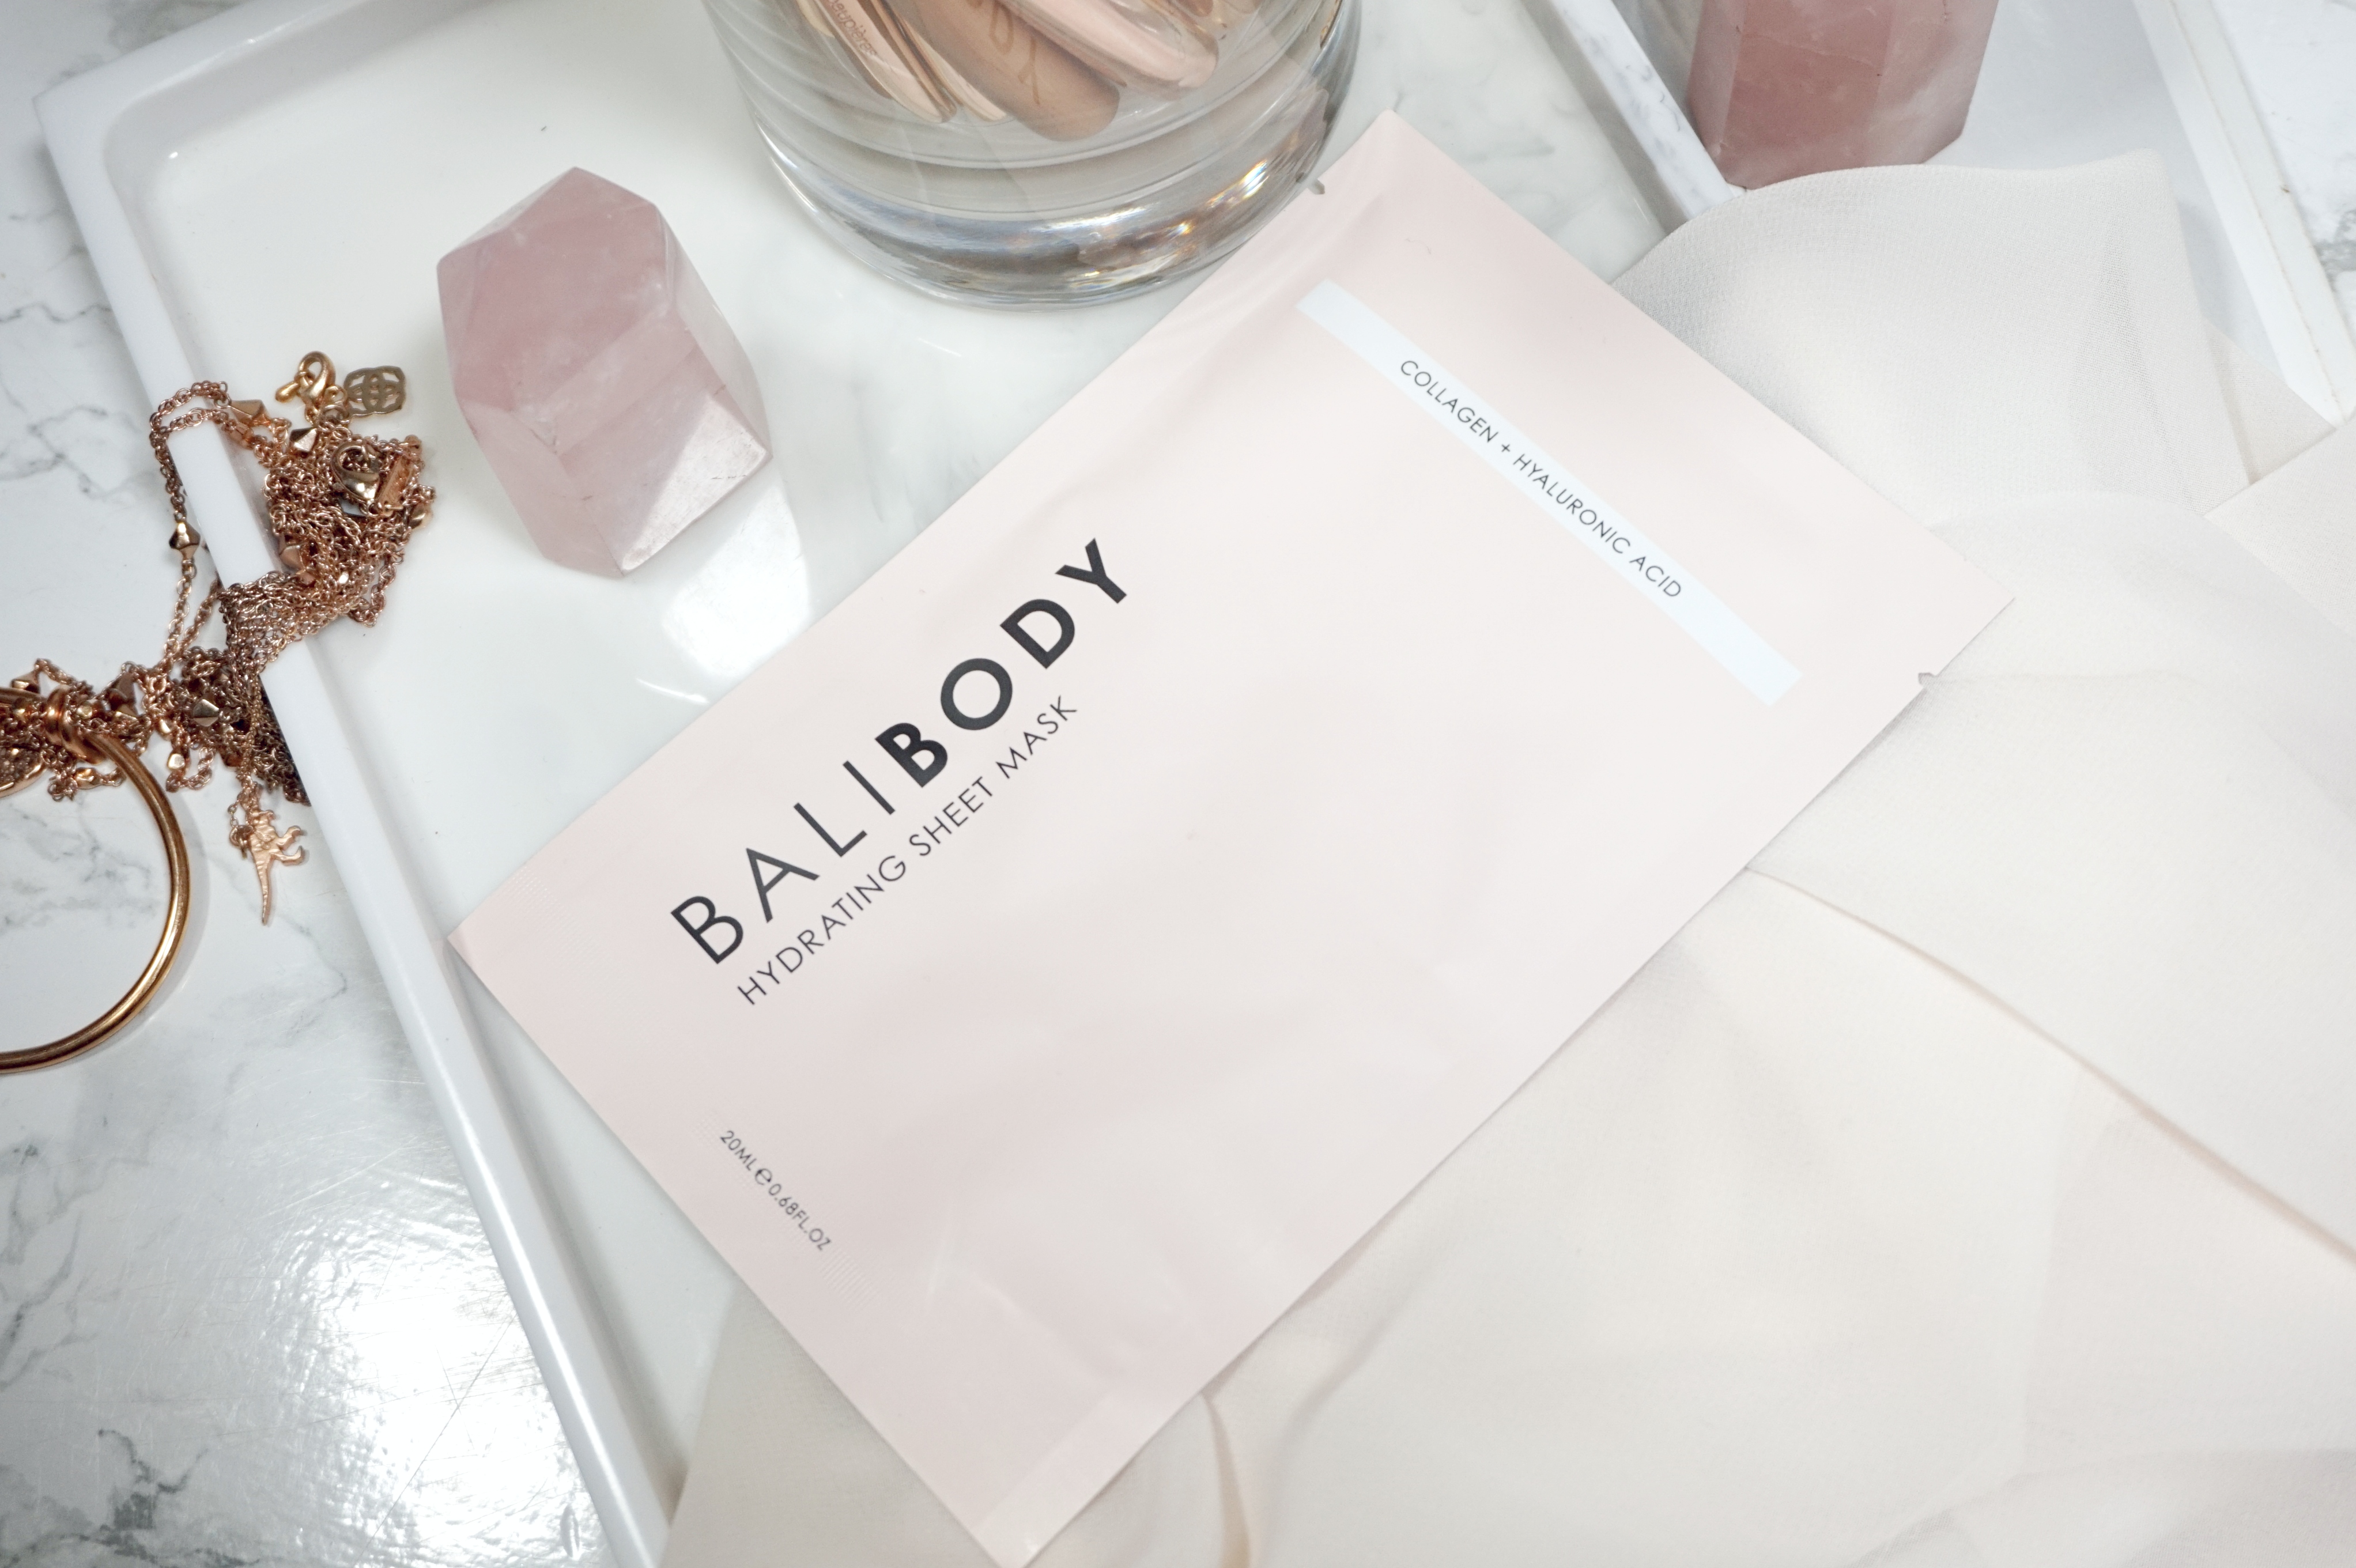 Bali Body Hydrating Sheet Mask Review